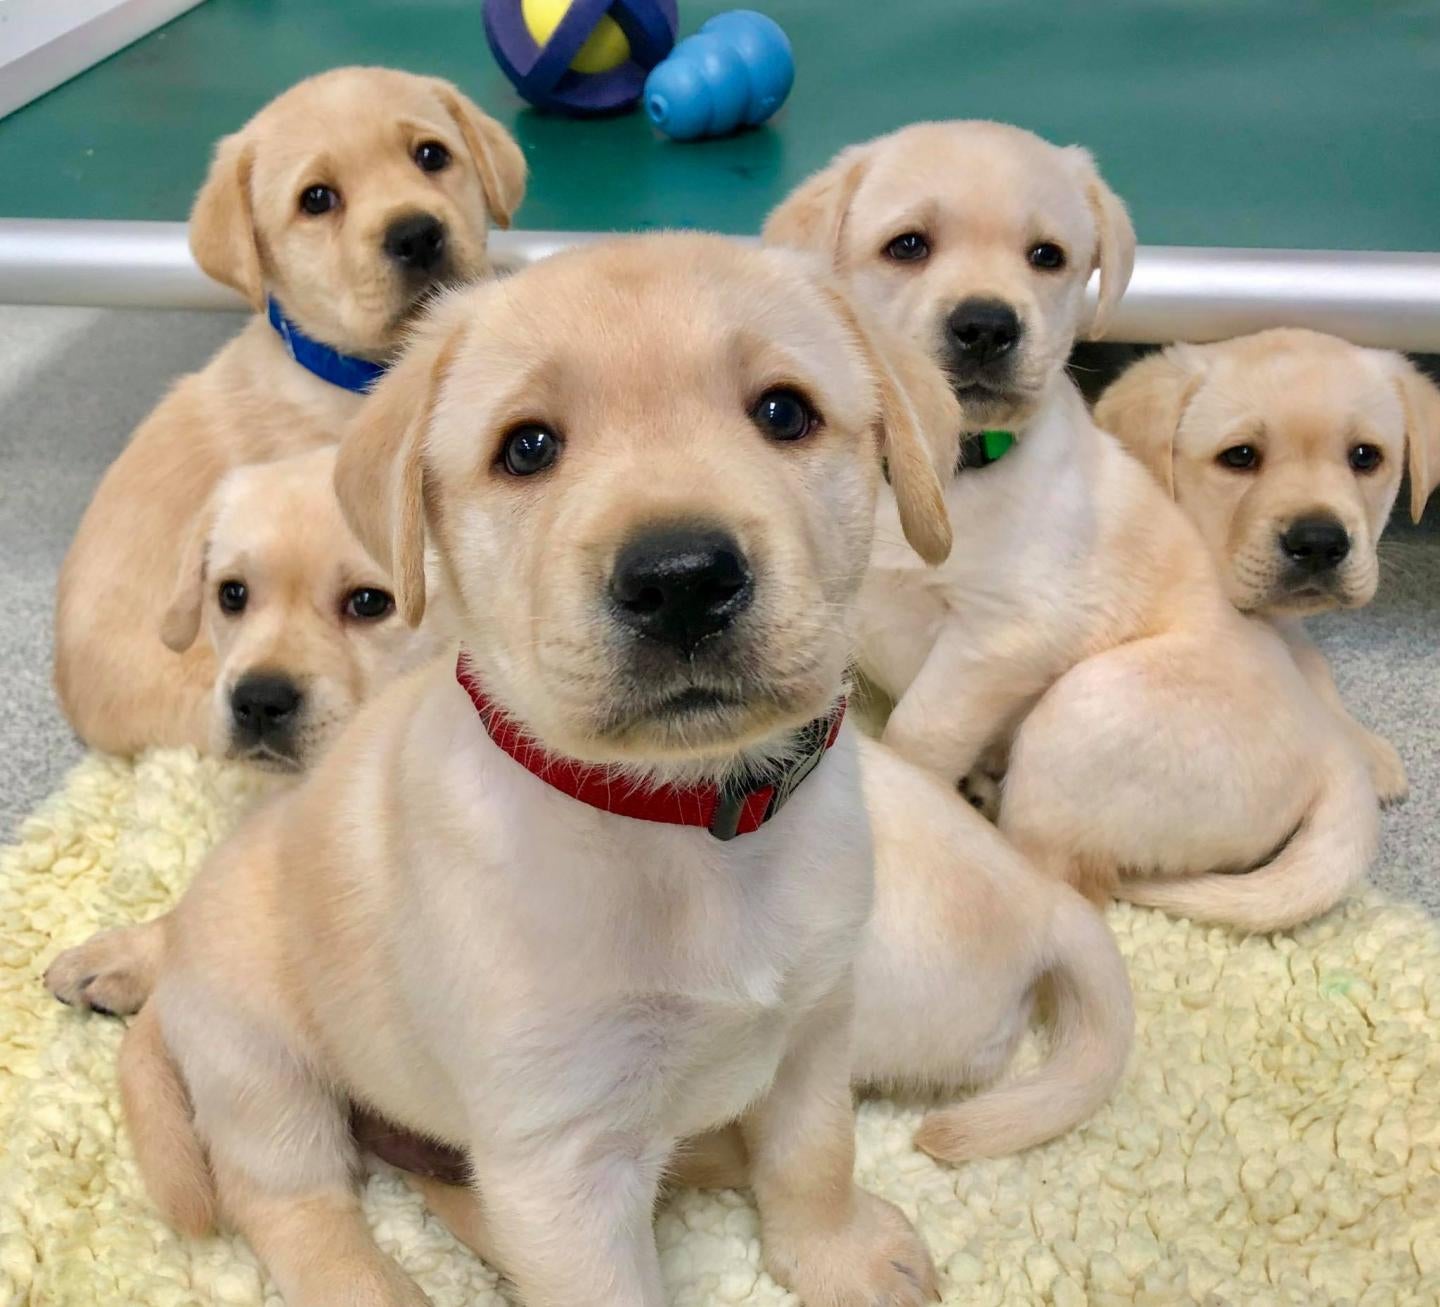 The study involved 375 budding service dogs from the Canine Companions service dog organisation. (Photo: Courtesy of Emily Bray/University of Arizona)